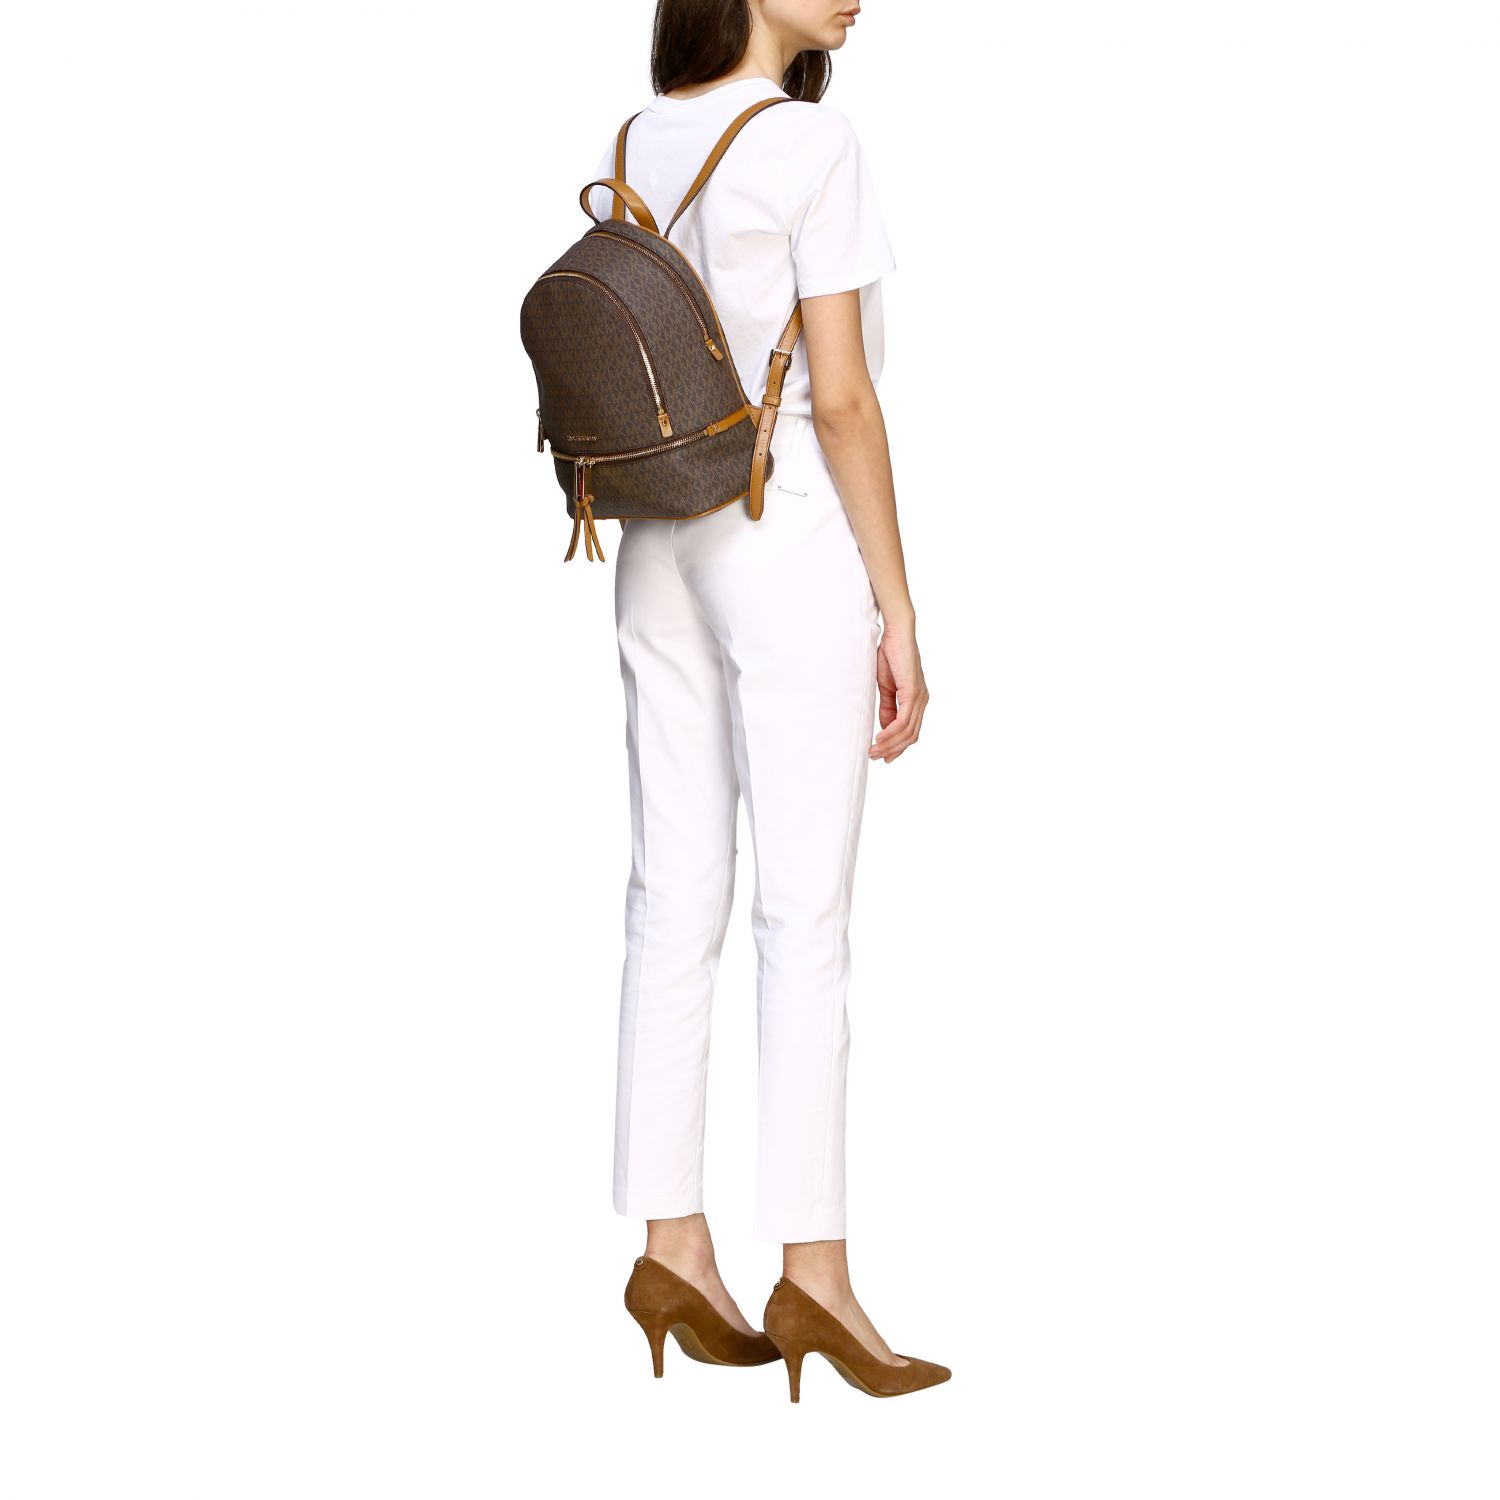 michael kors rhea zip backpack